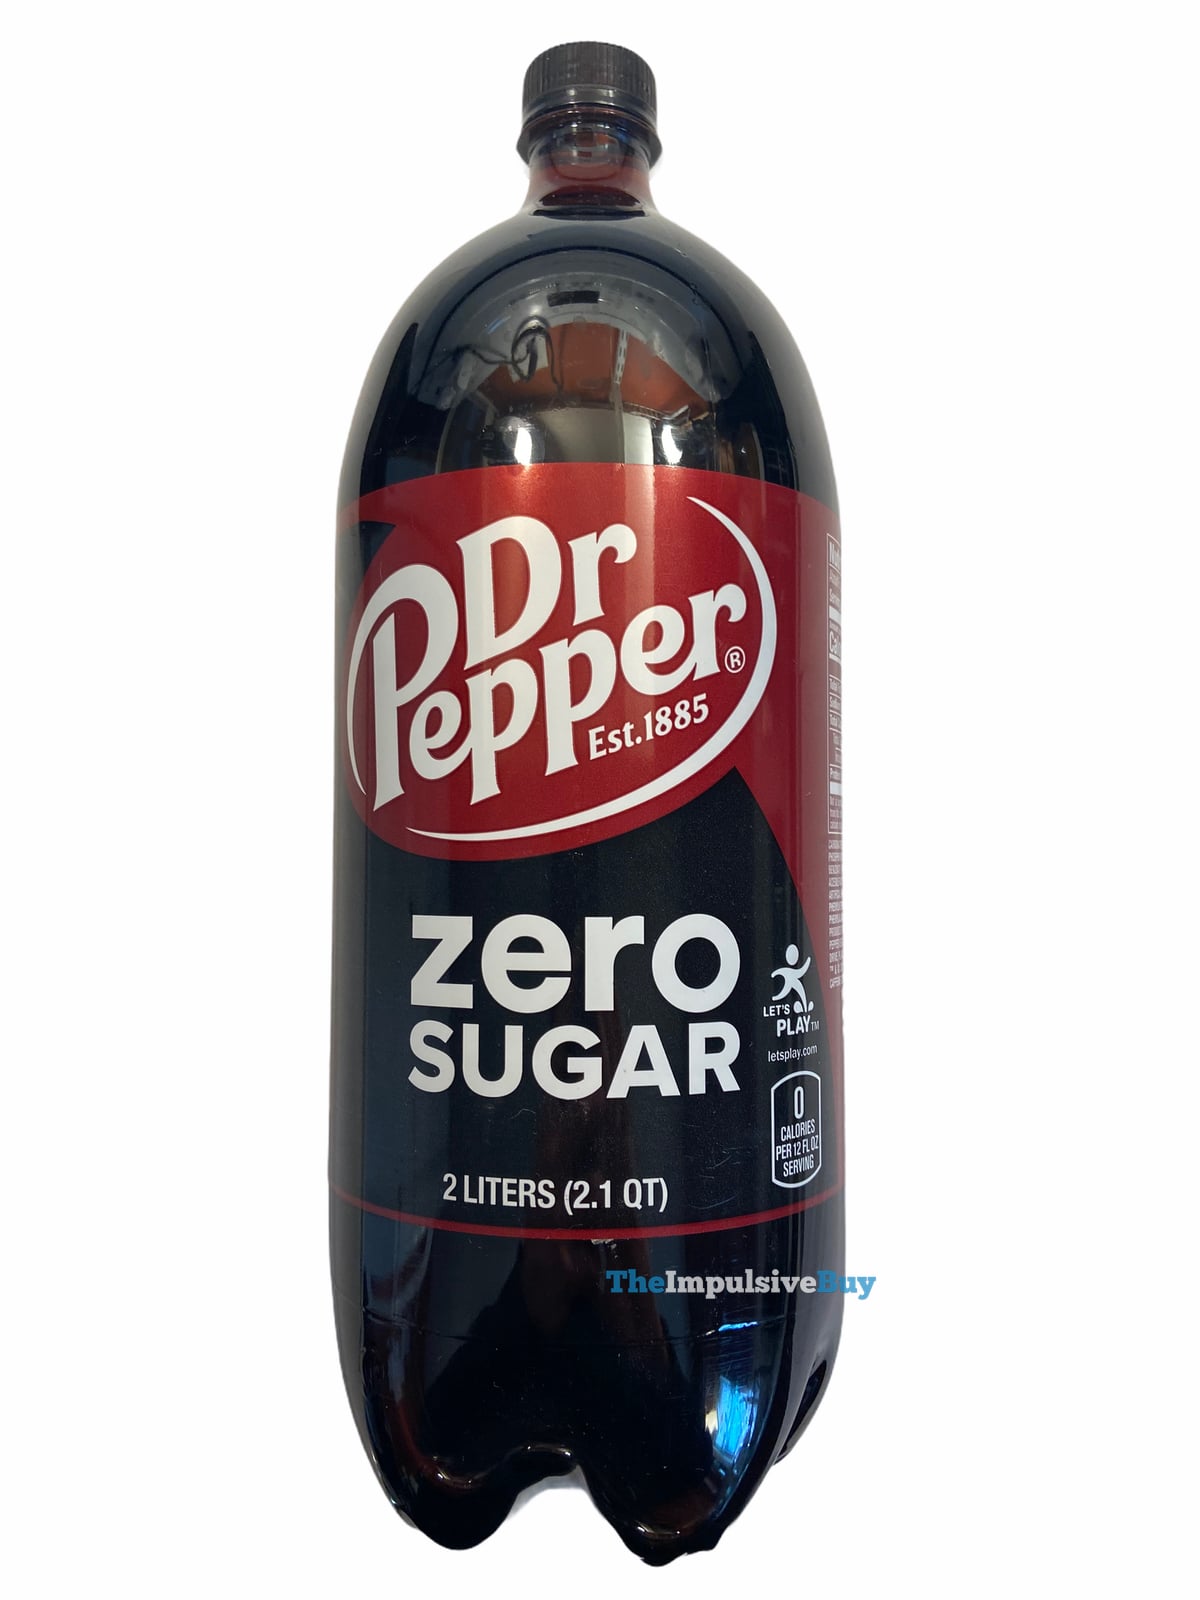 REVIEW: Dr Pepper Zero Sugar - The Impulsive Buy